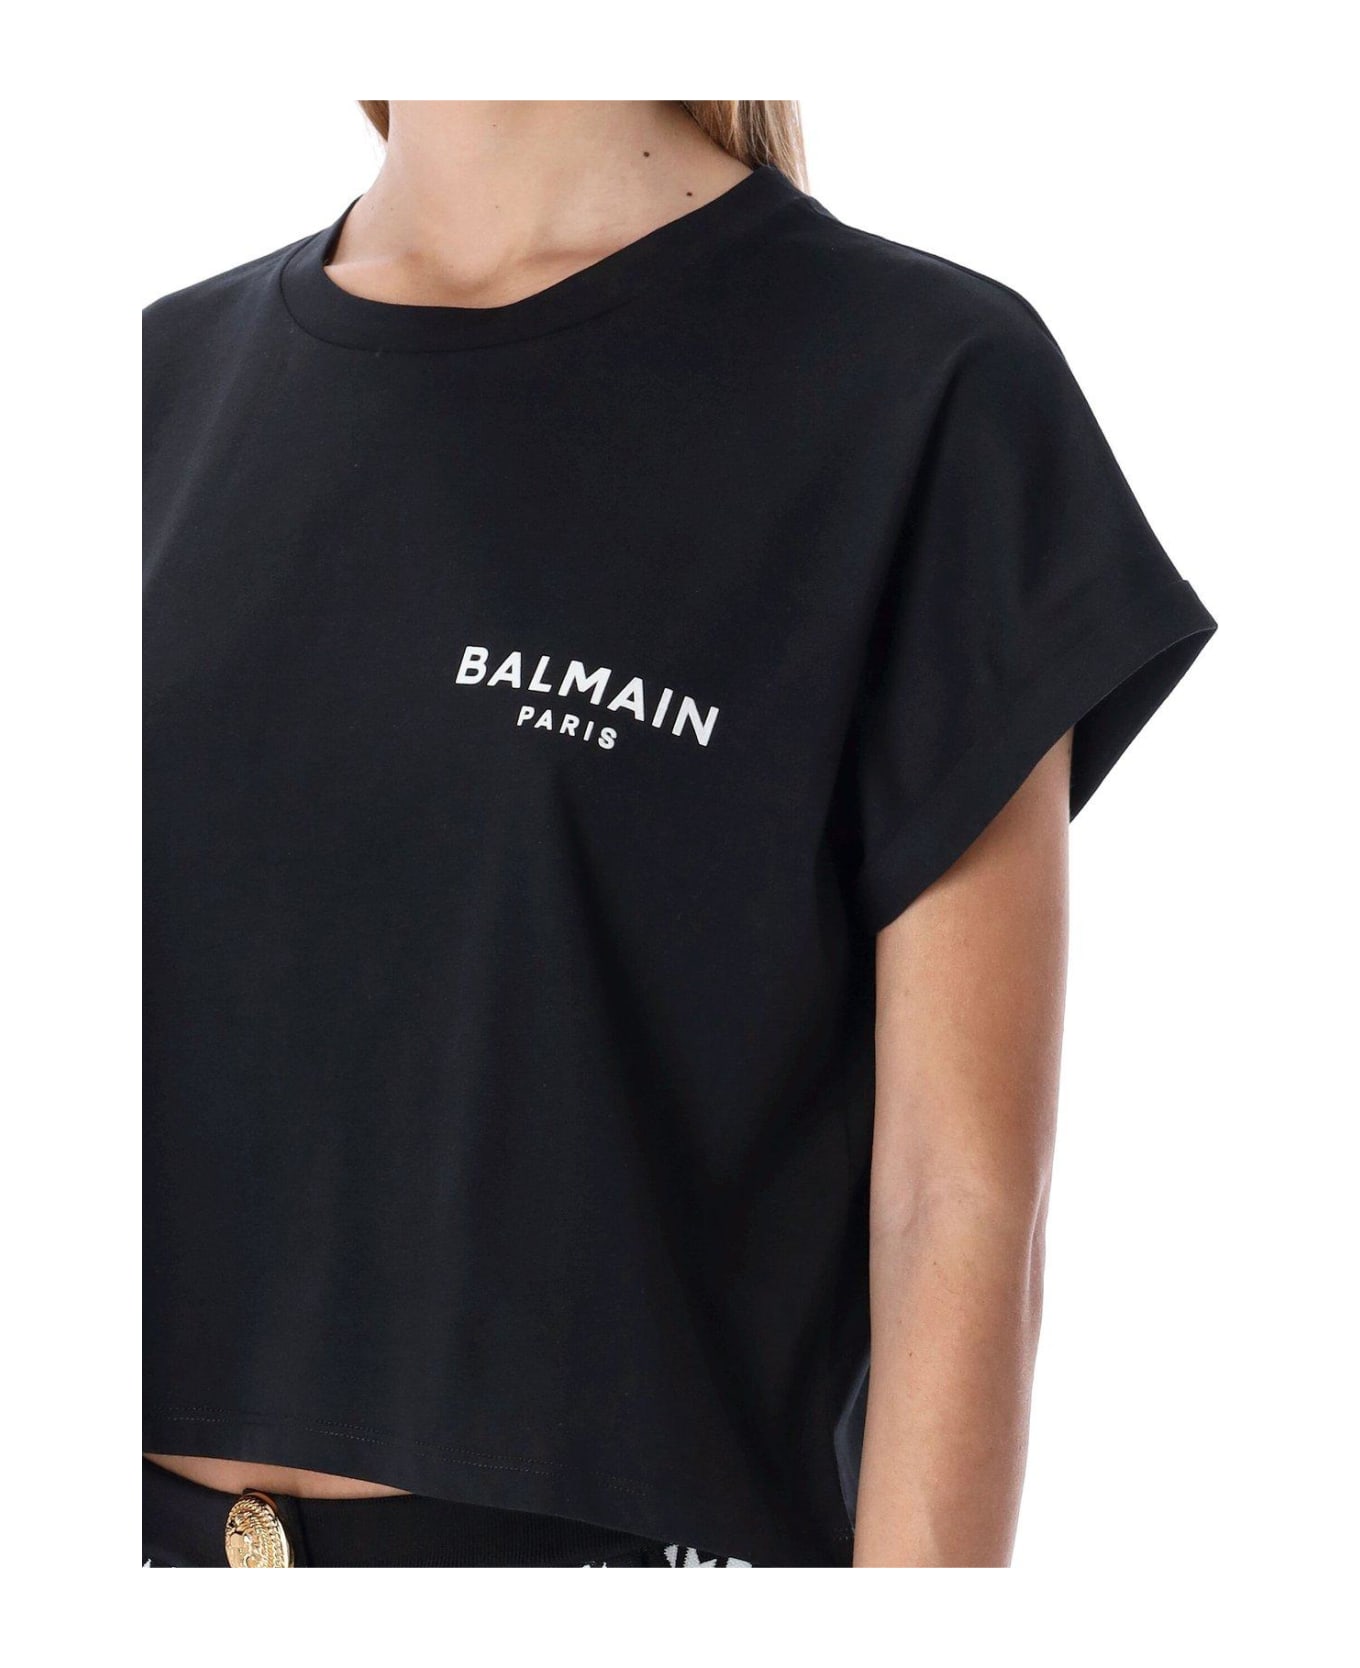 Balmain Logo Printed Short-sleeved Cropped T-shirt - Nero/bianco